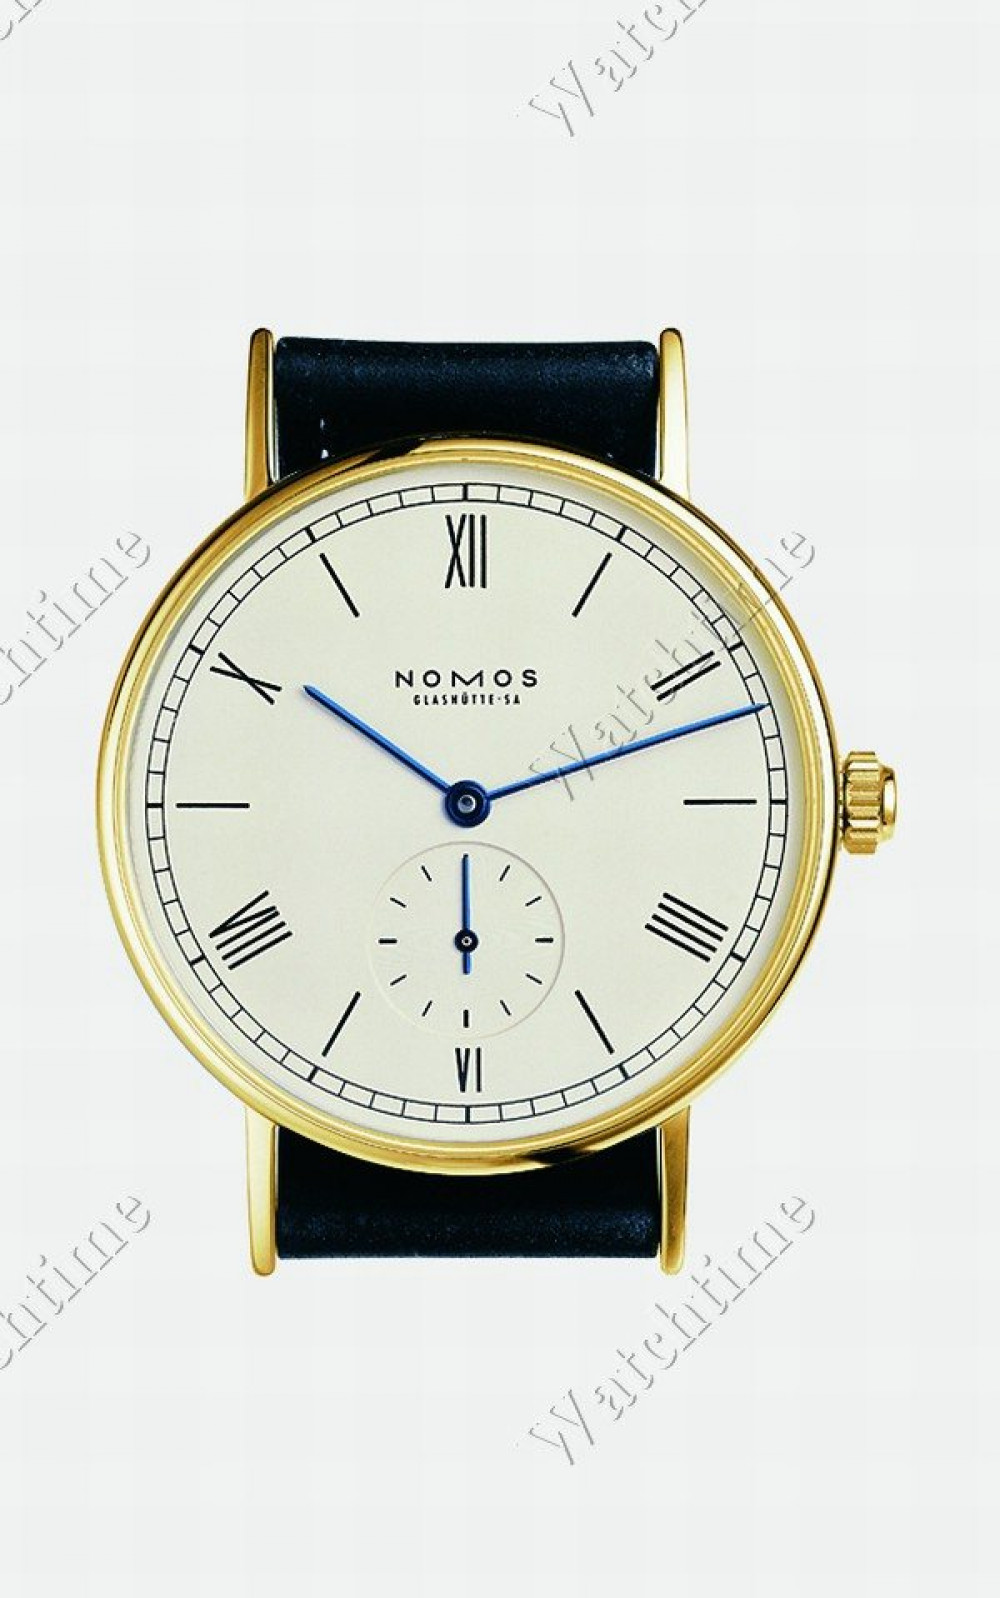 Zegarek firmy Nomos Glashütte, model Ludwig Gold